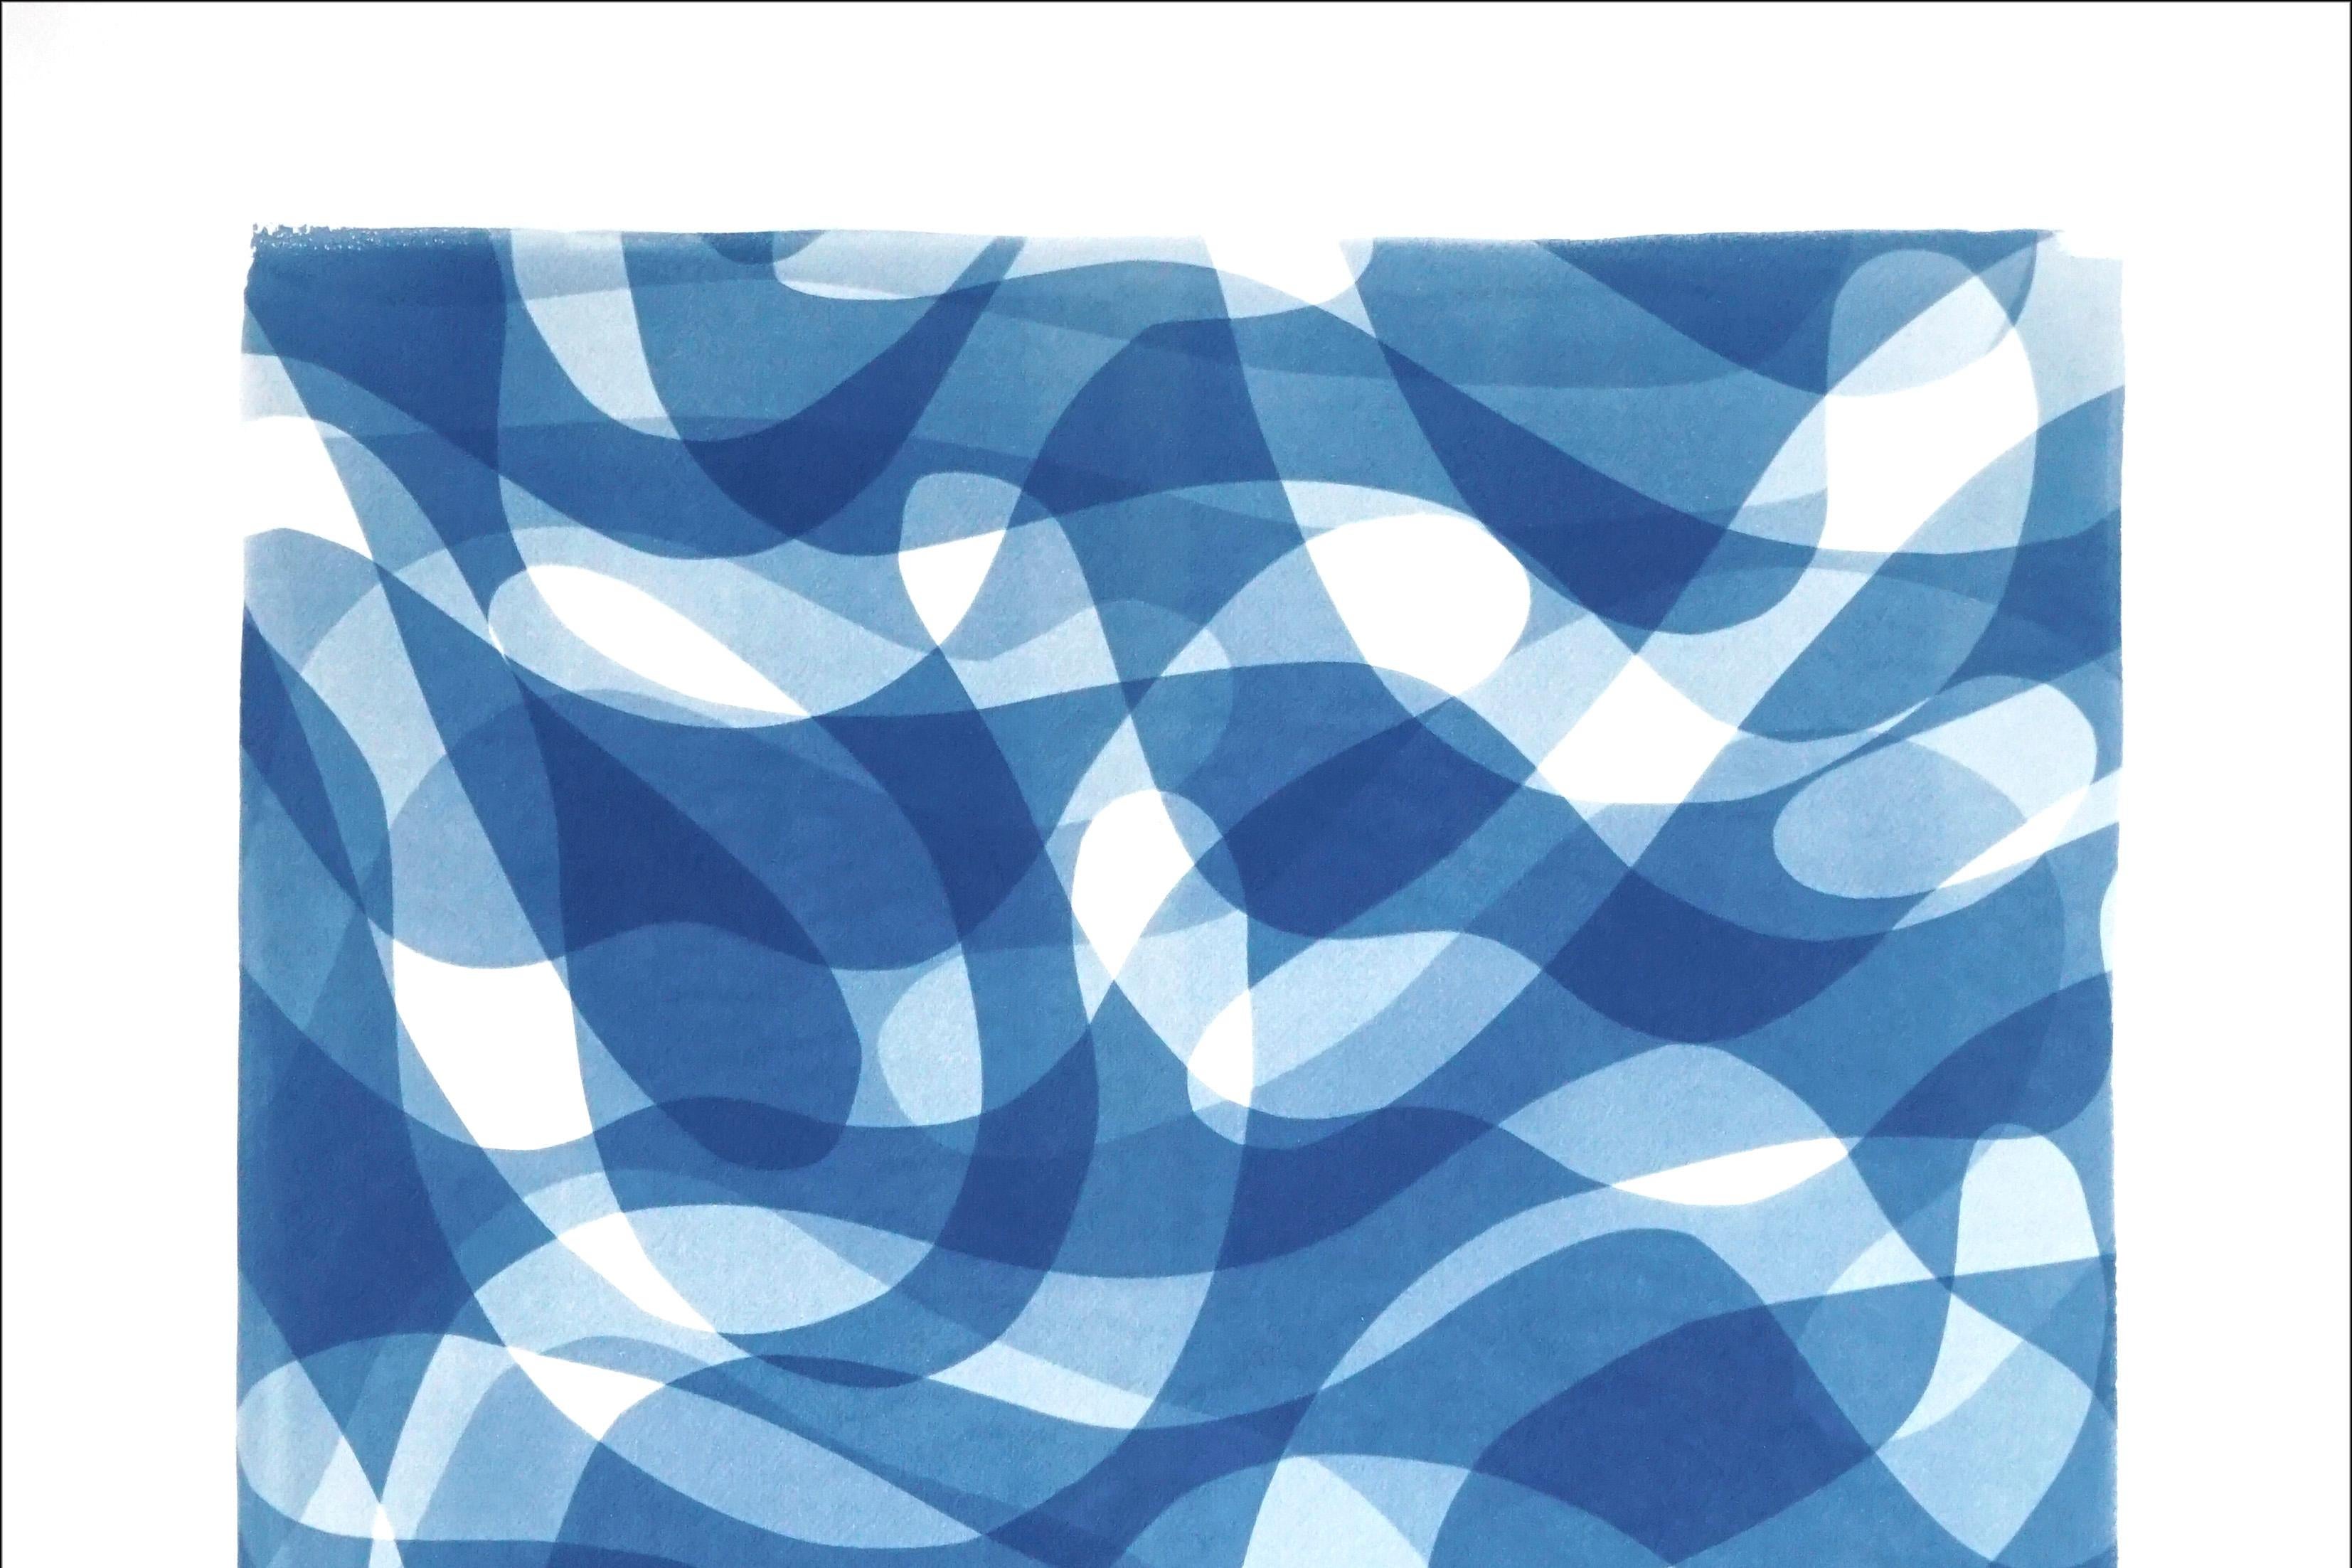 Falling Swirls, Organic Curvy Layers in Blue Tones, Handmade Cyanotype on Paper For Sale 1